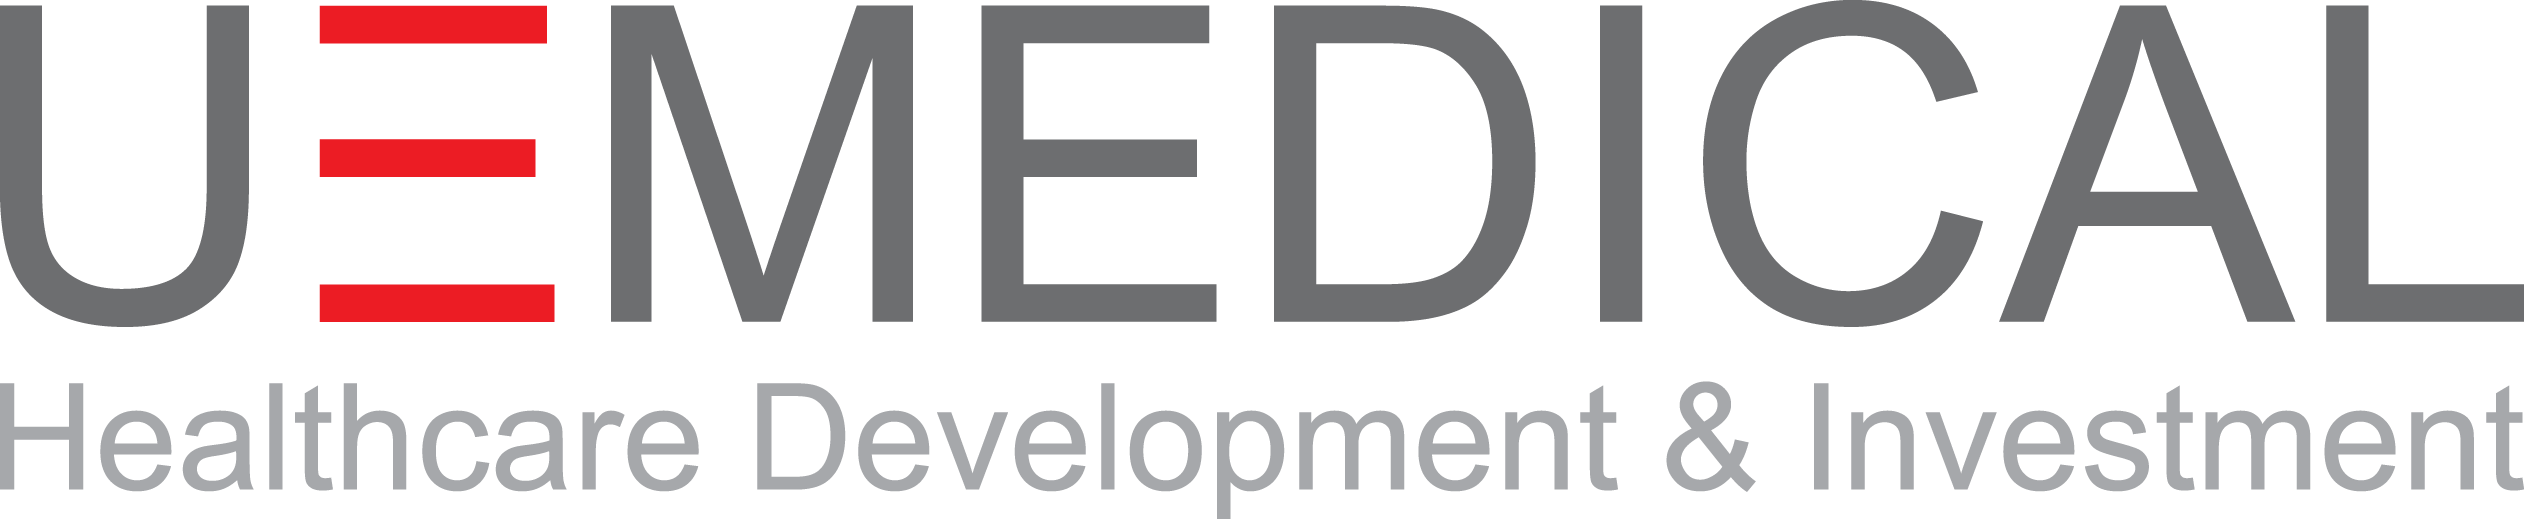 UEMedical-logo